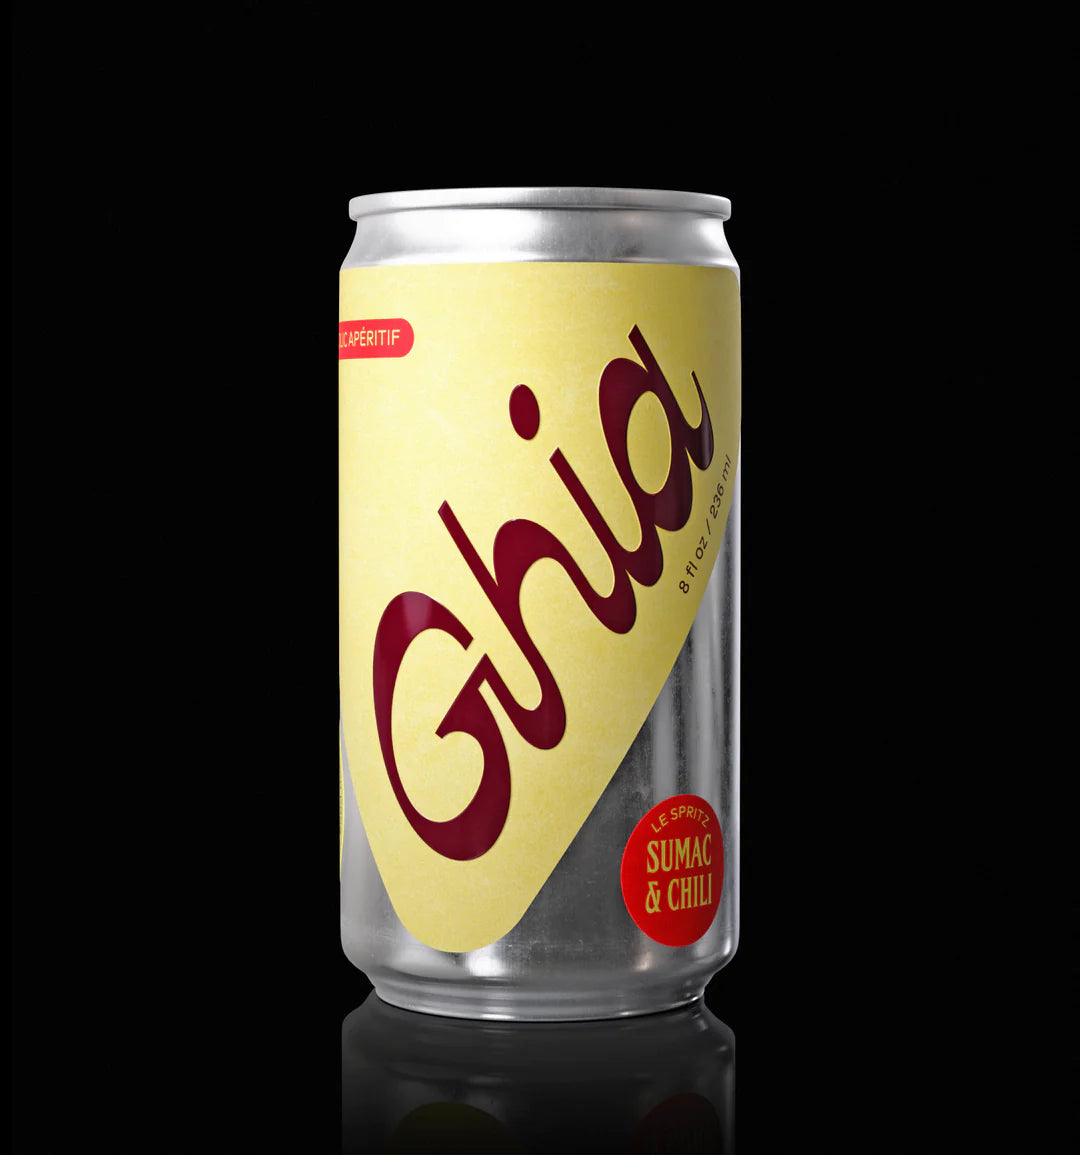 Ghia Sumac and Chili Soda available at Rook & Rose.